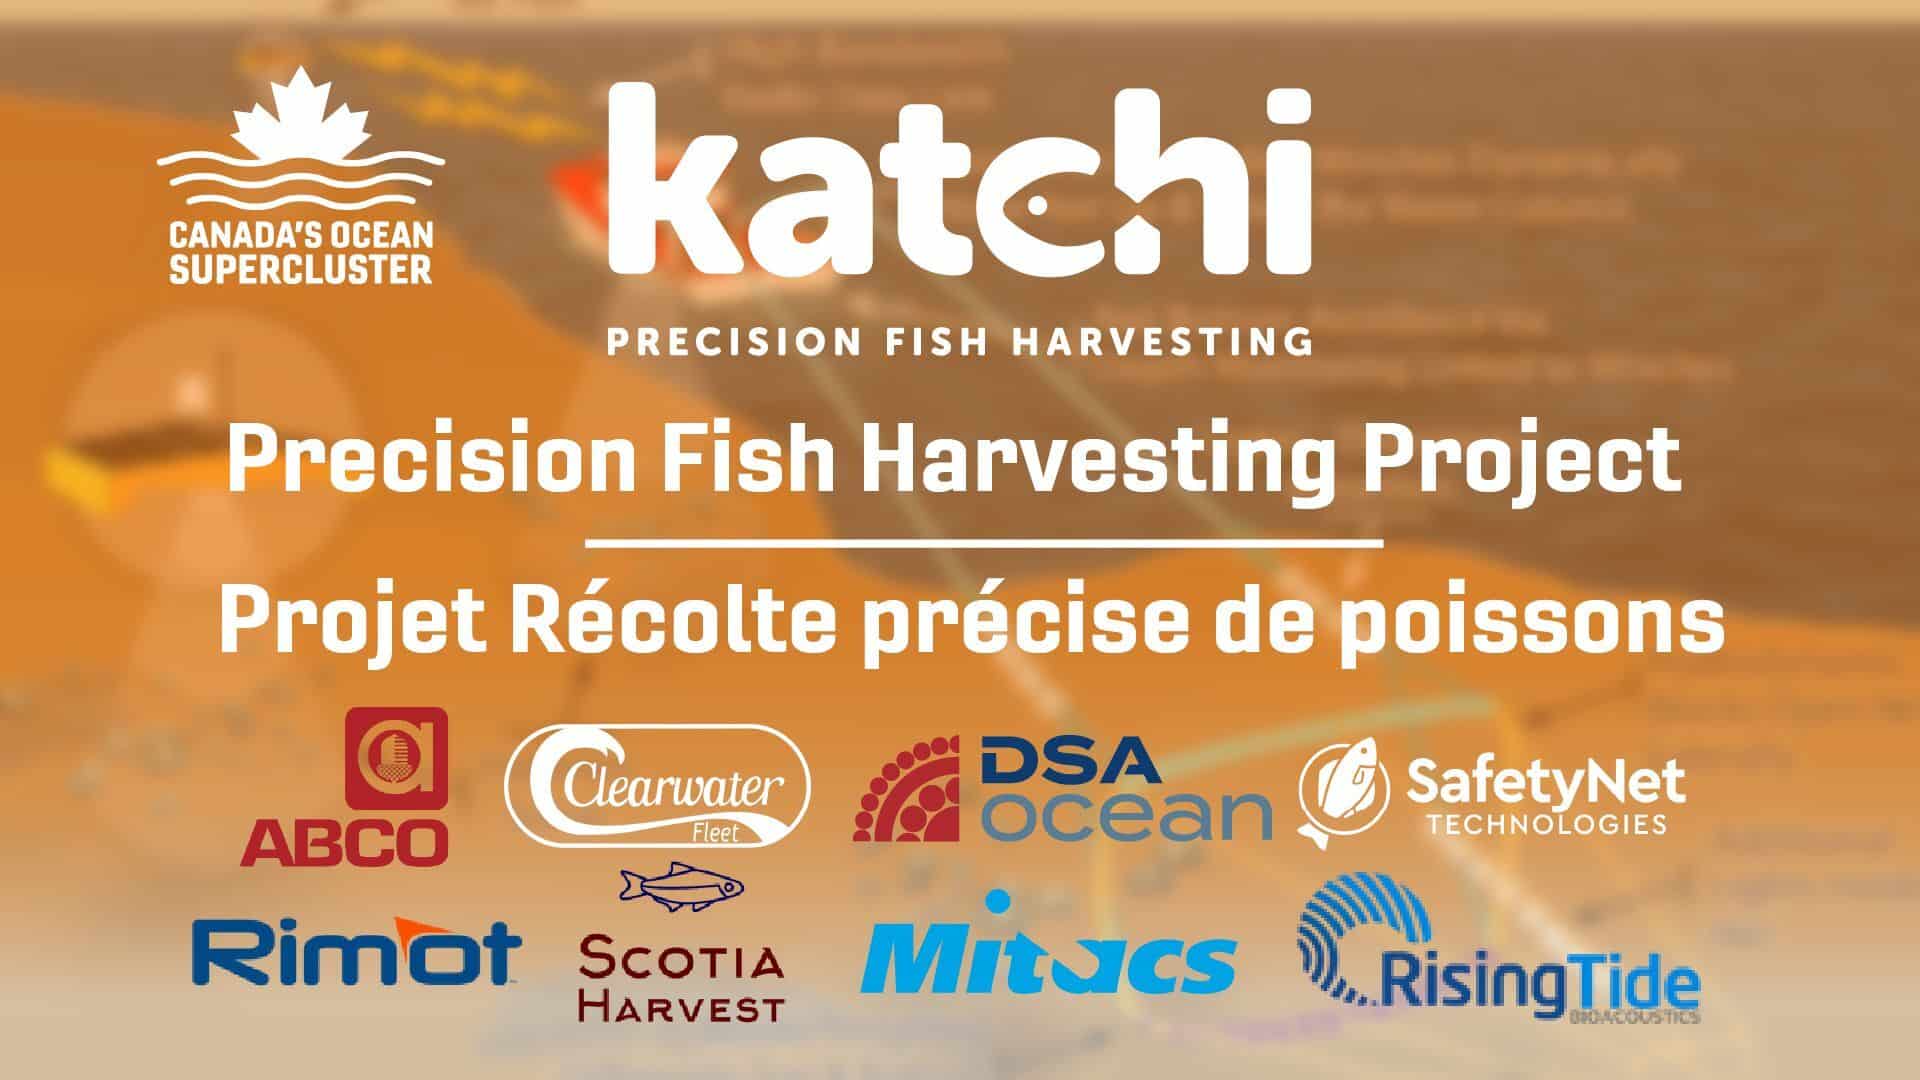 Canada’s Ocean Supercluster Announces $3.3M Precision Fish Harvesting Project